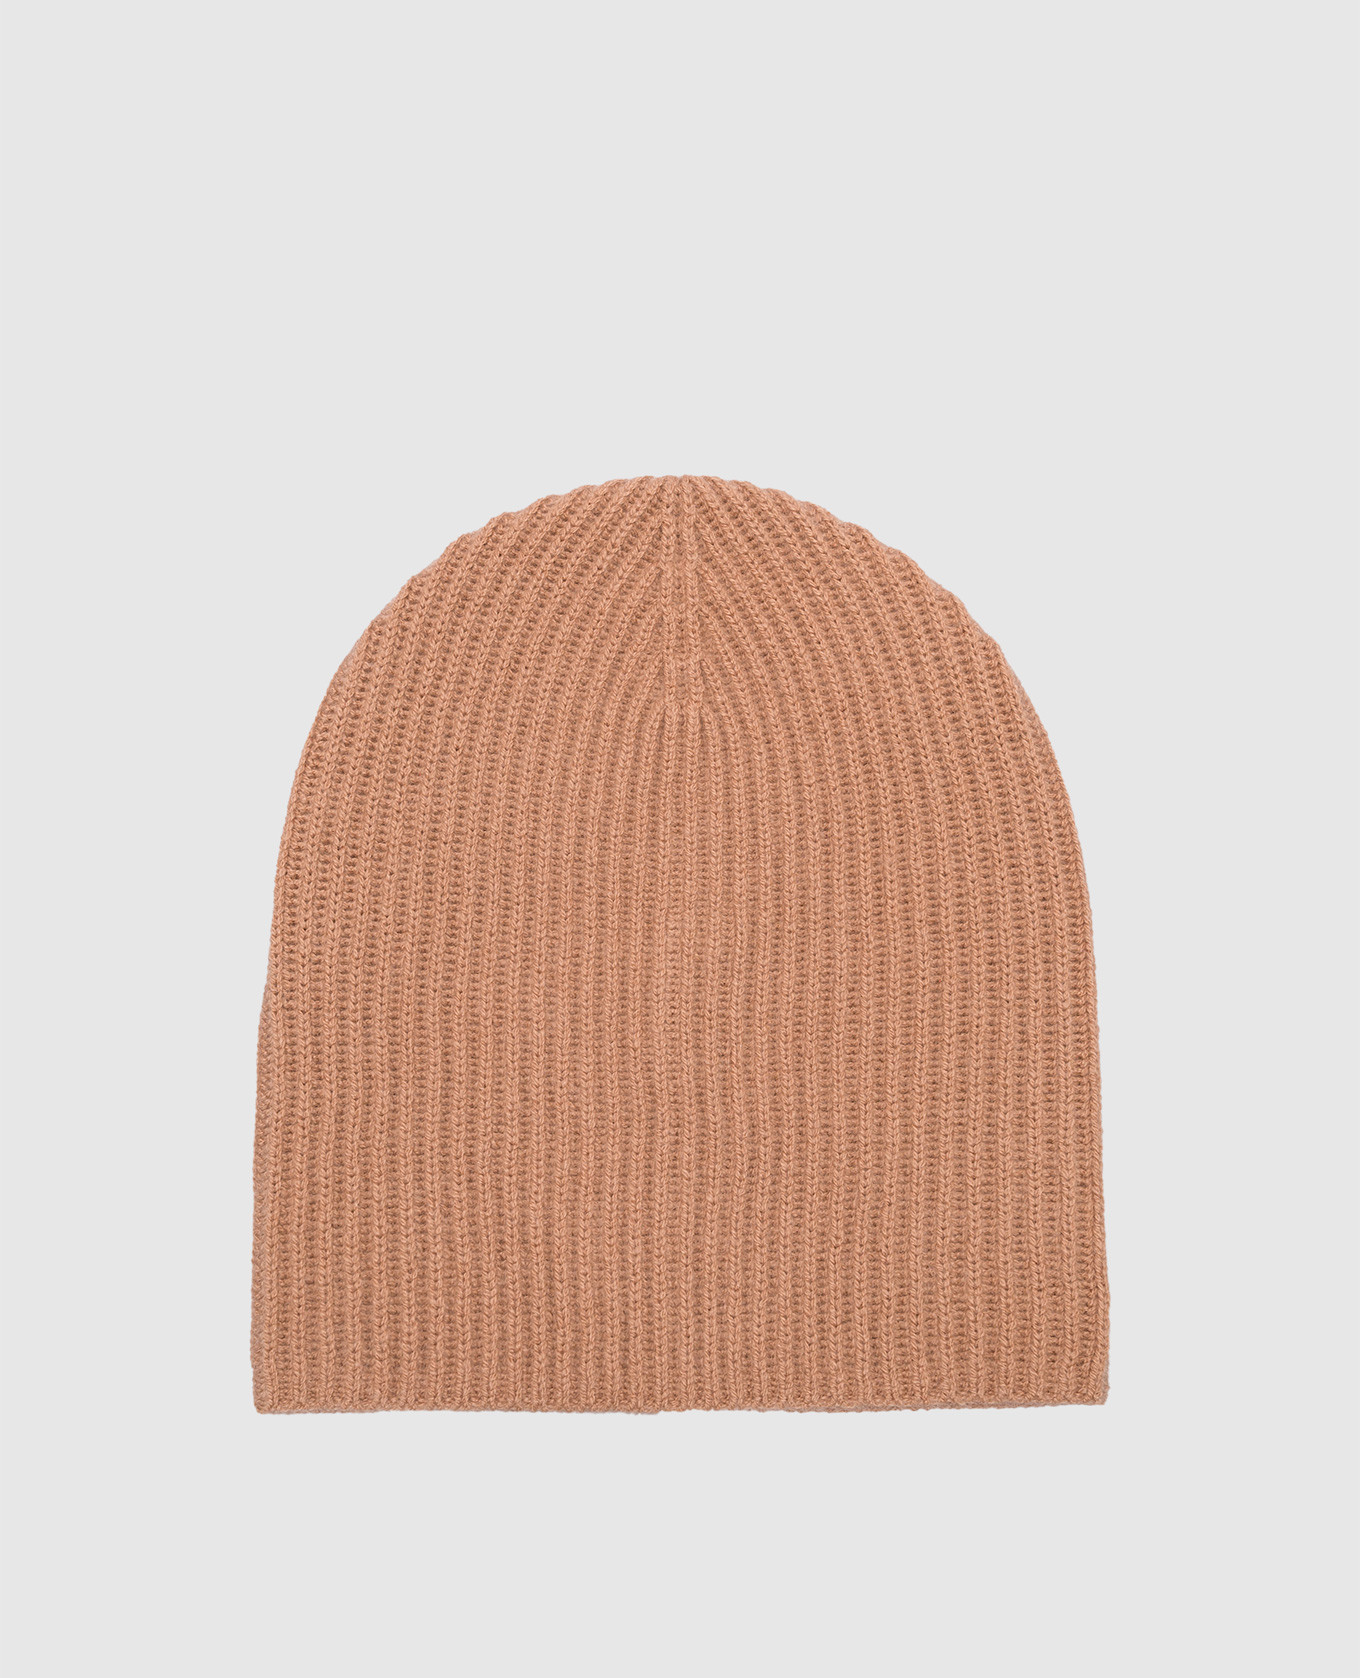 Brown cashmere hat